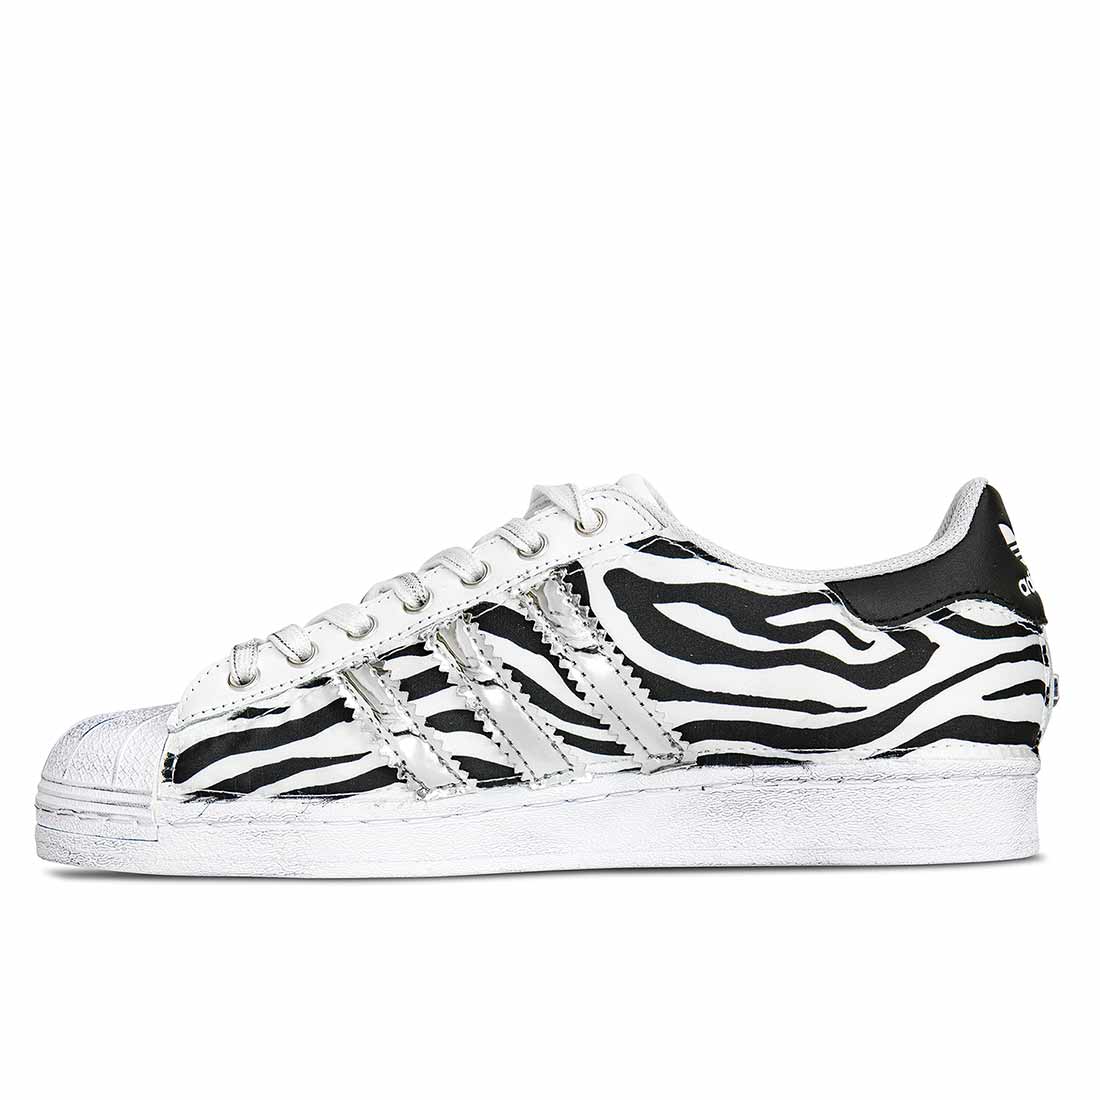 Adidas zebra animalier color argento reflex